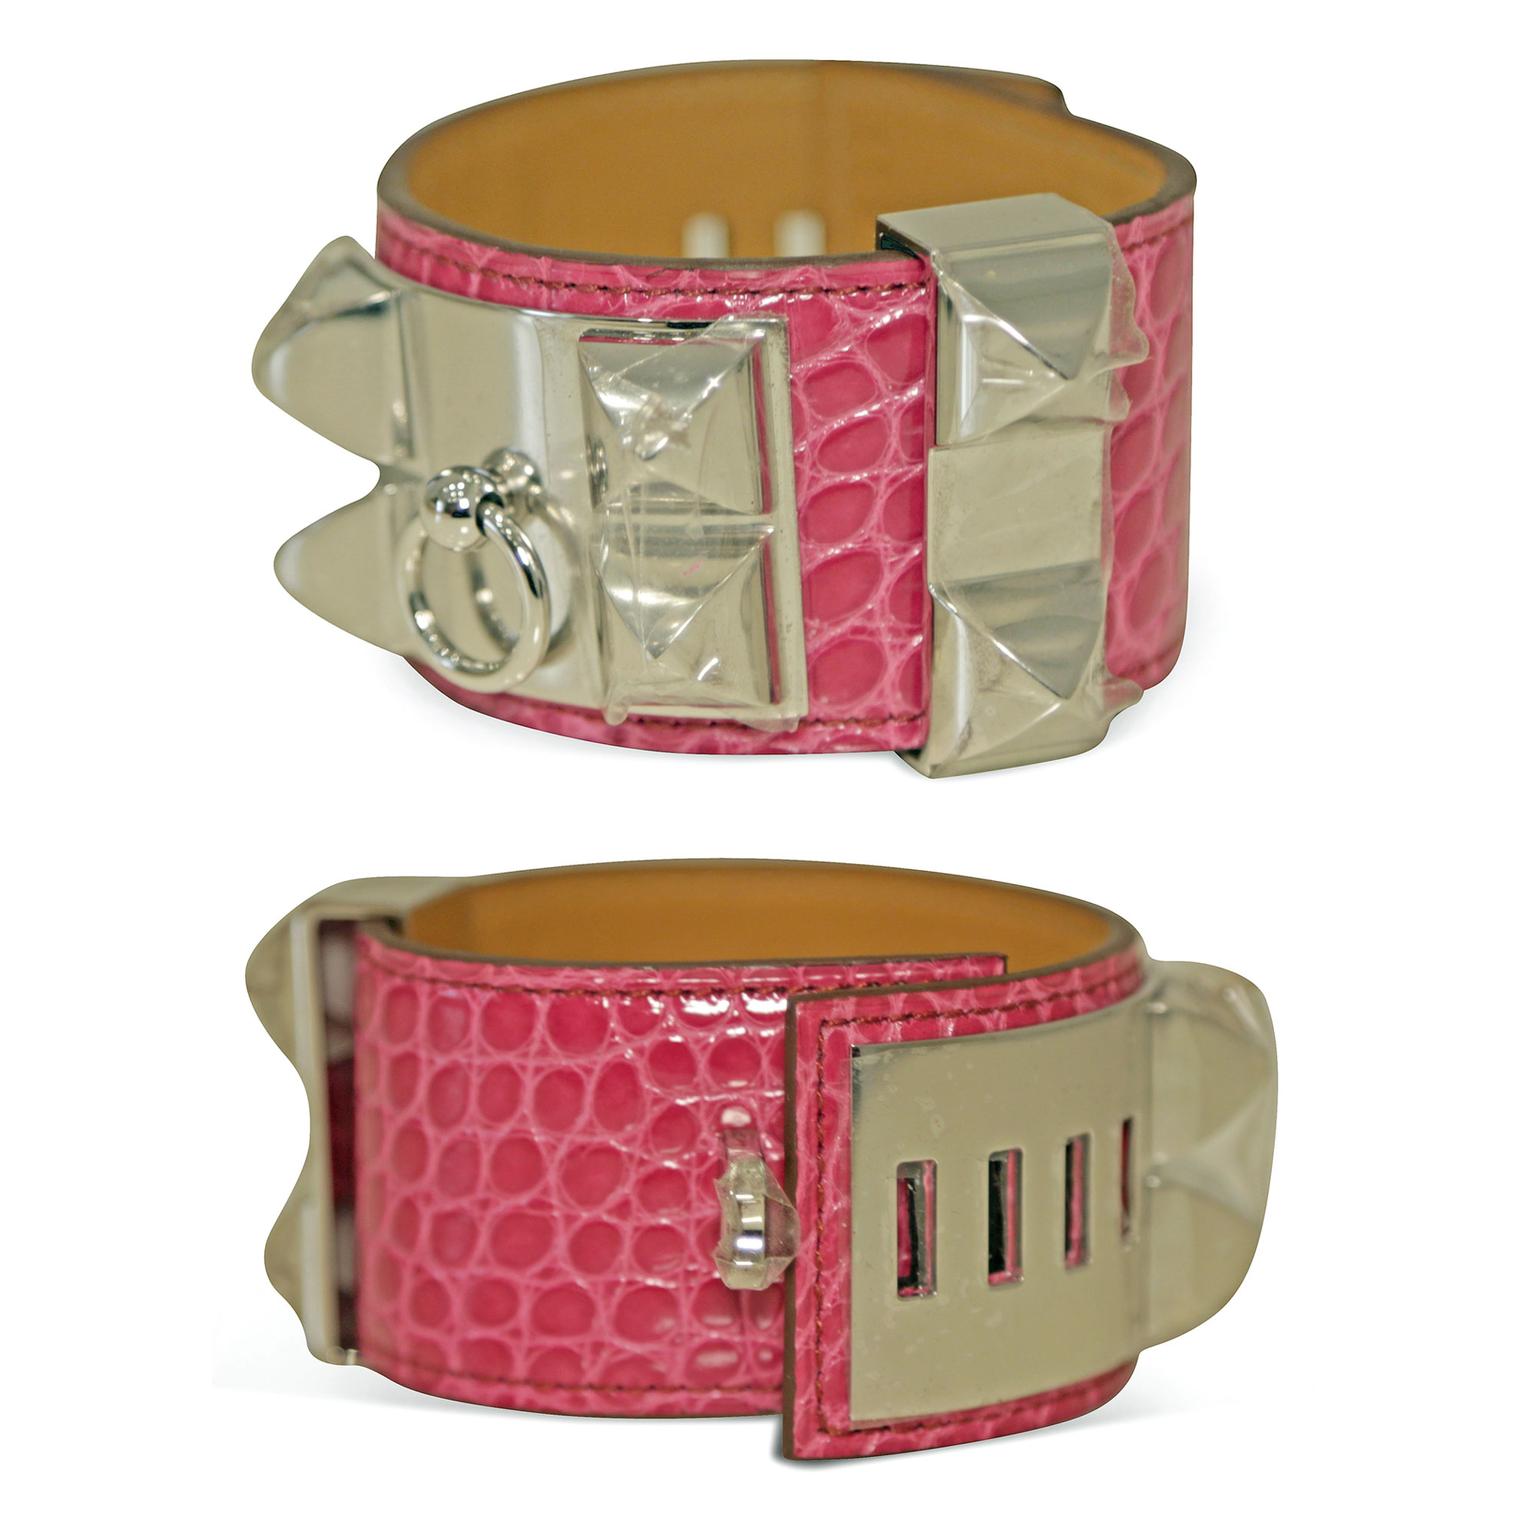 Paddle 8 Hermes Collier de Chien pink cuff